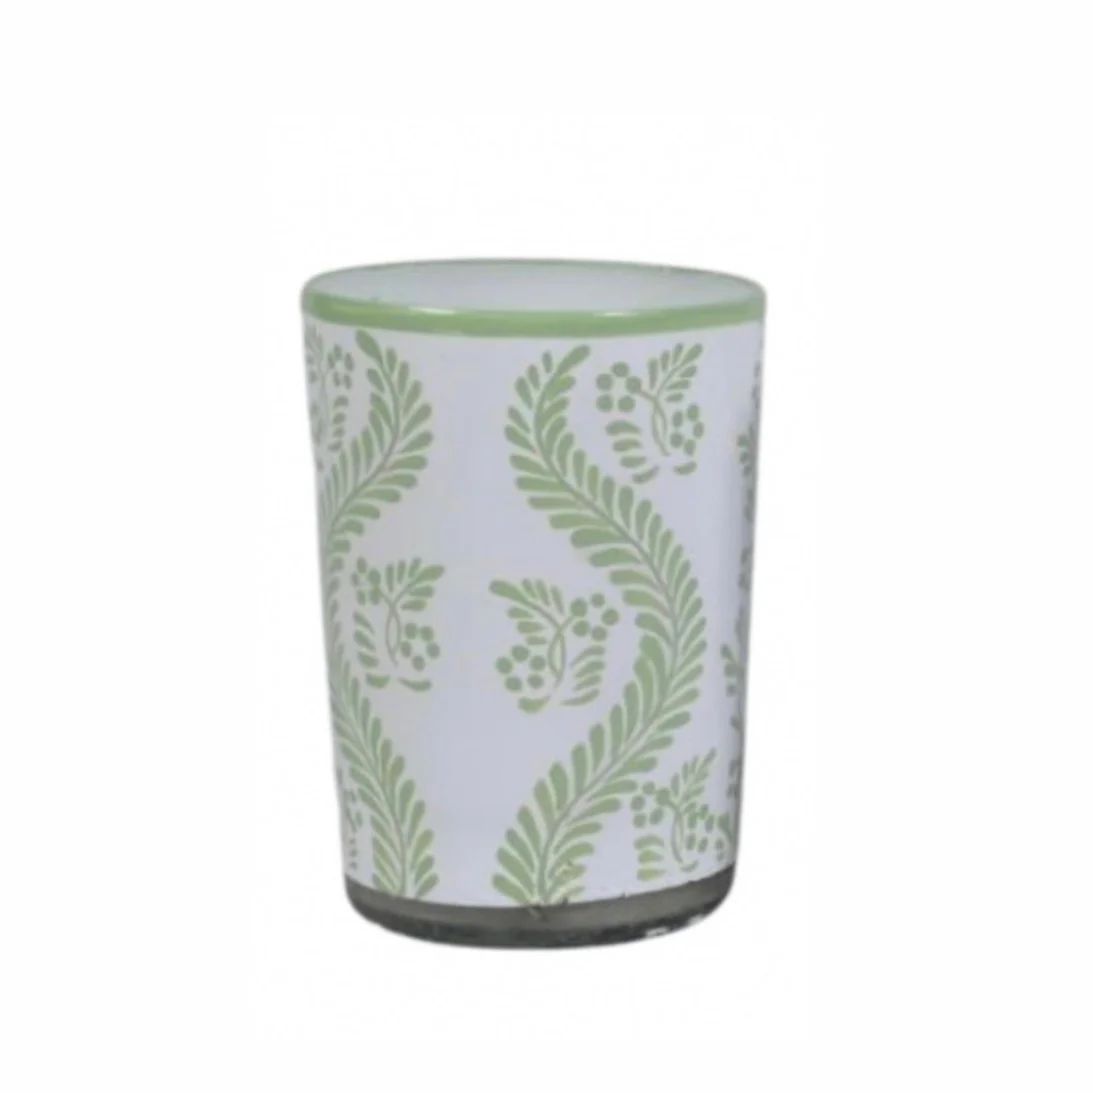 Handpainted Moss Green Floral Glass/Bud Vase | Sea Marie Designs